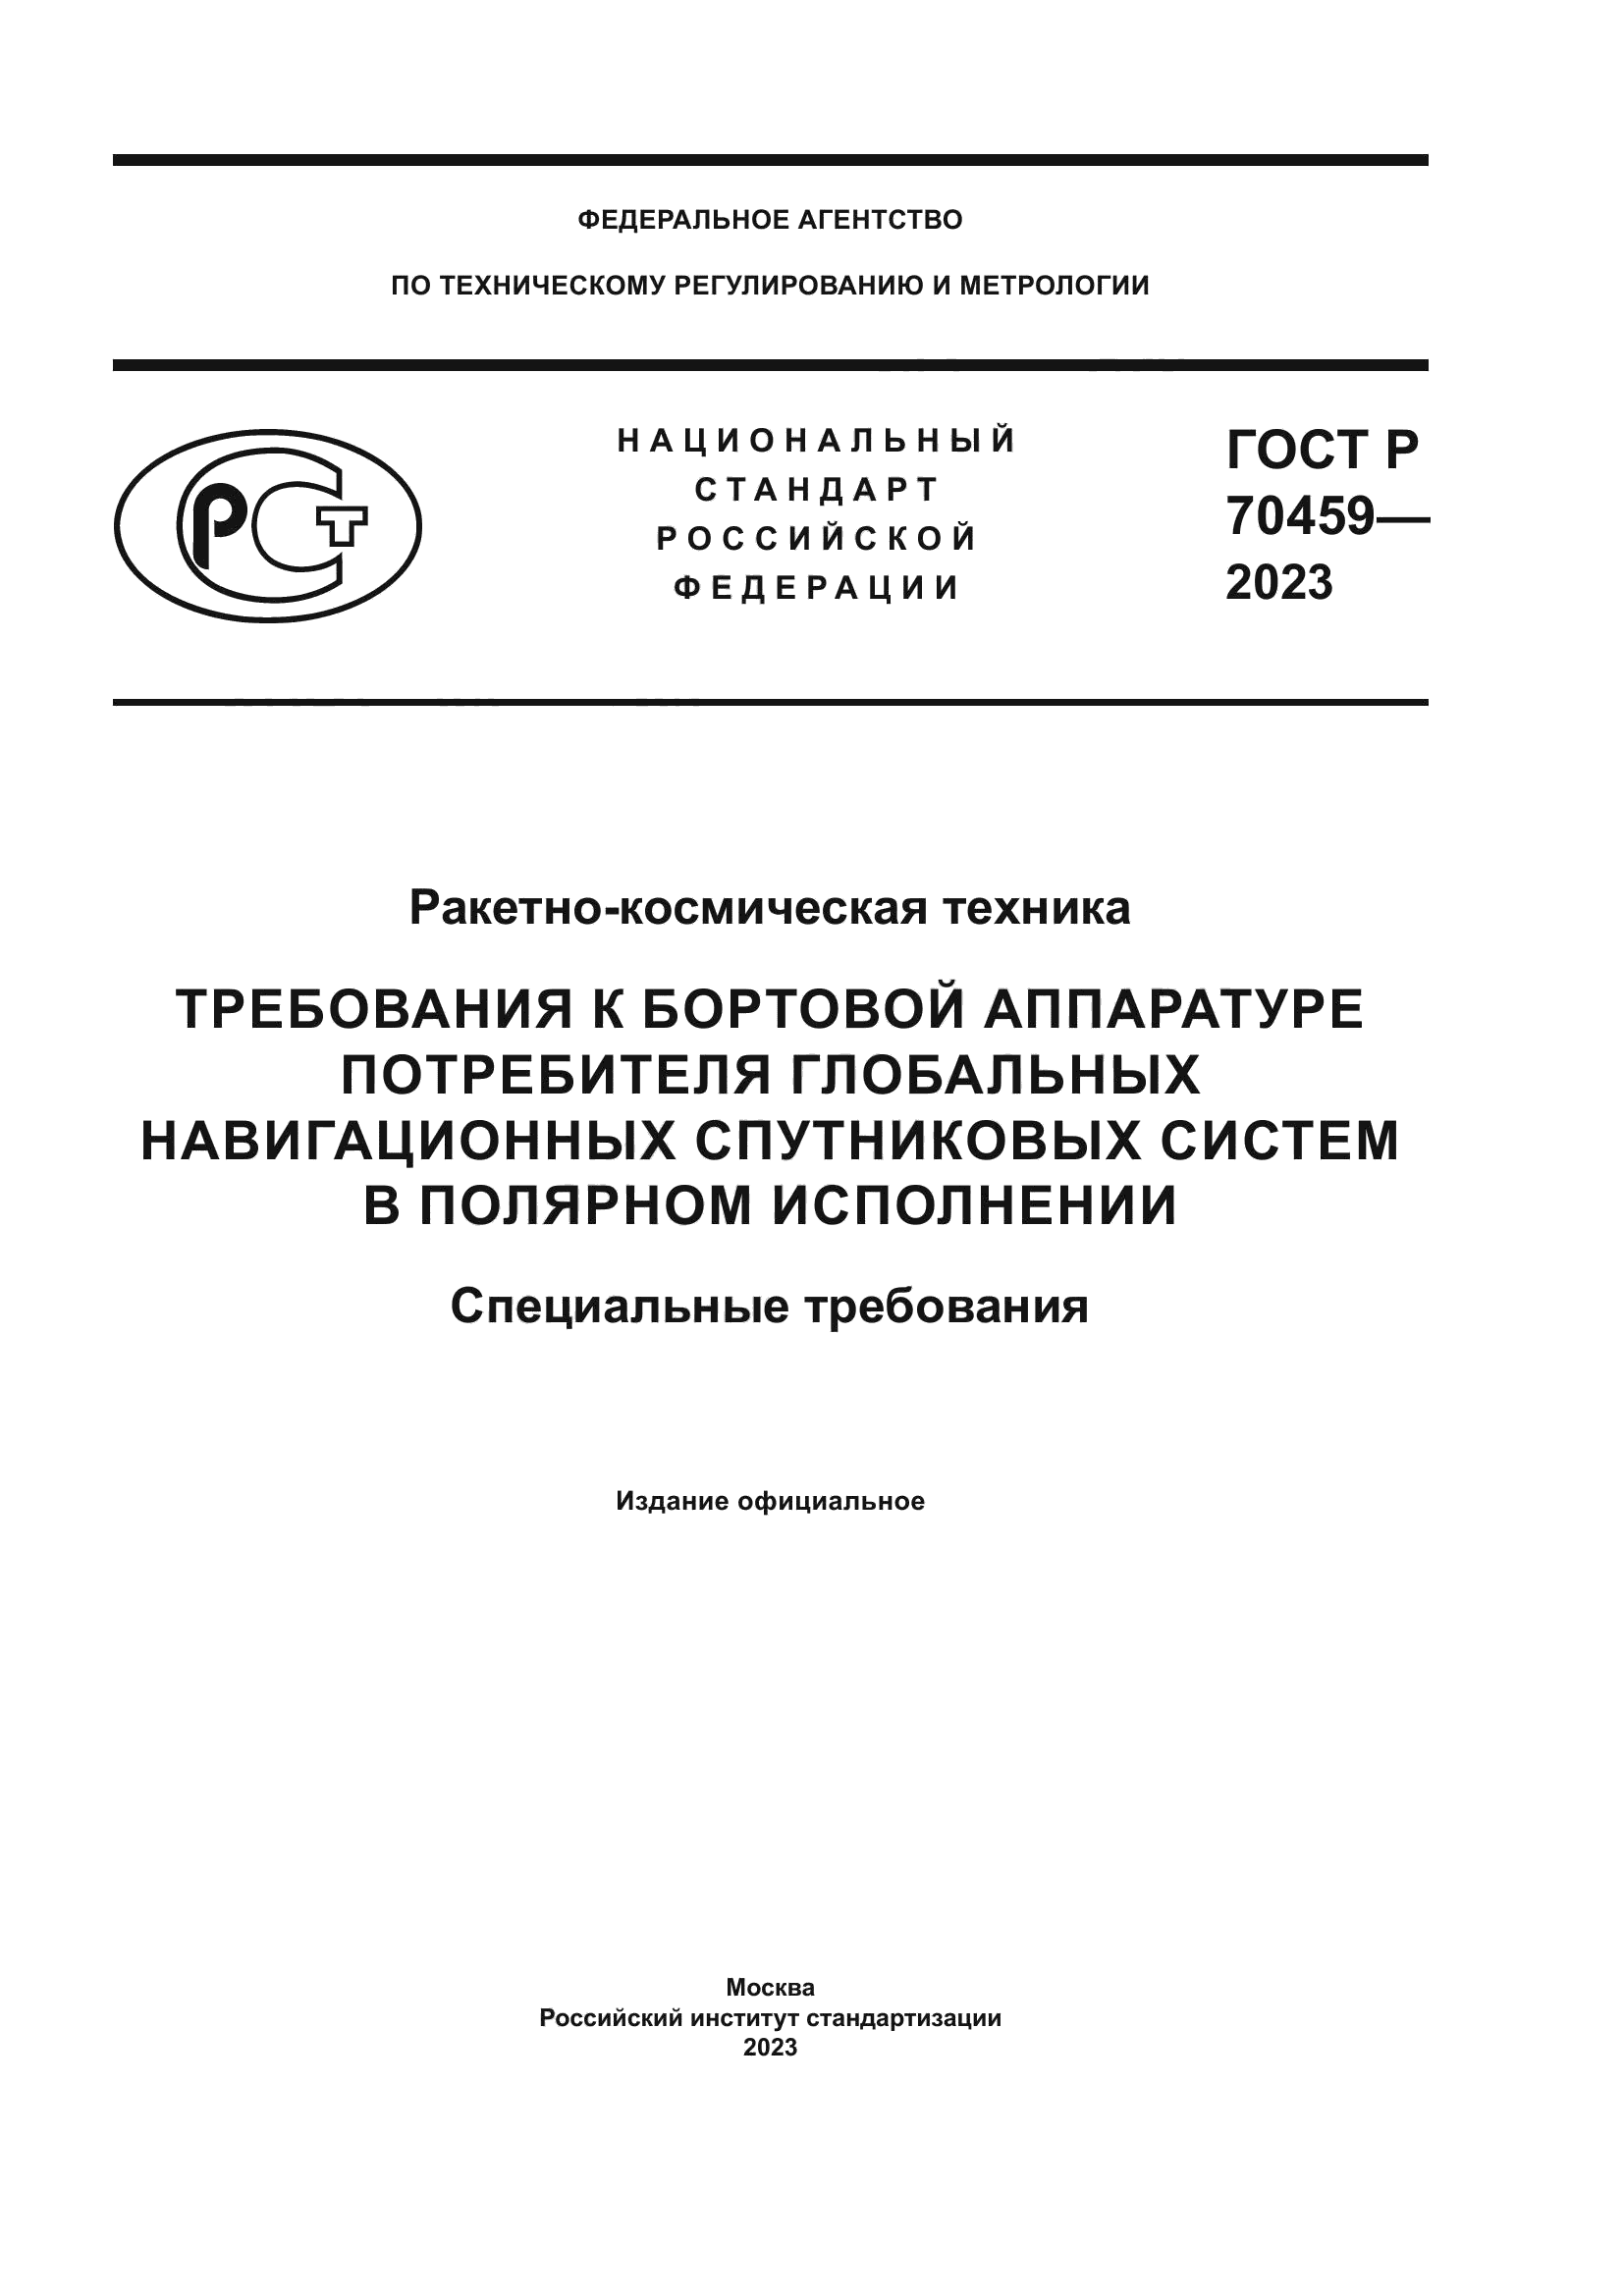 ГОСТ Р 70459-2023